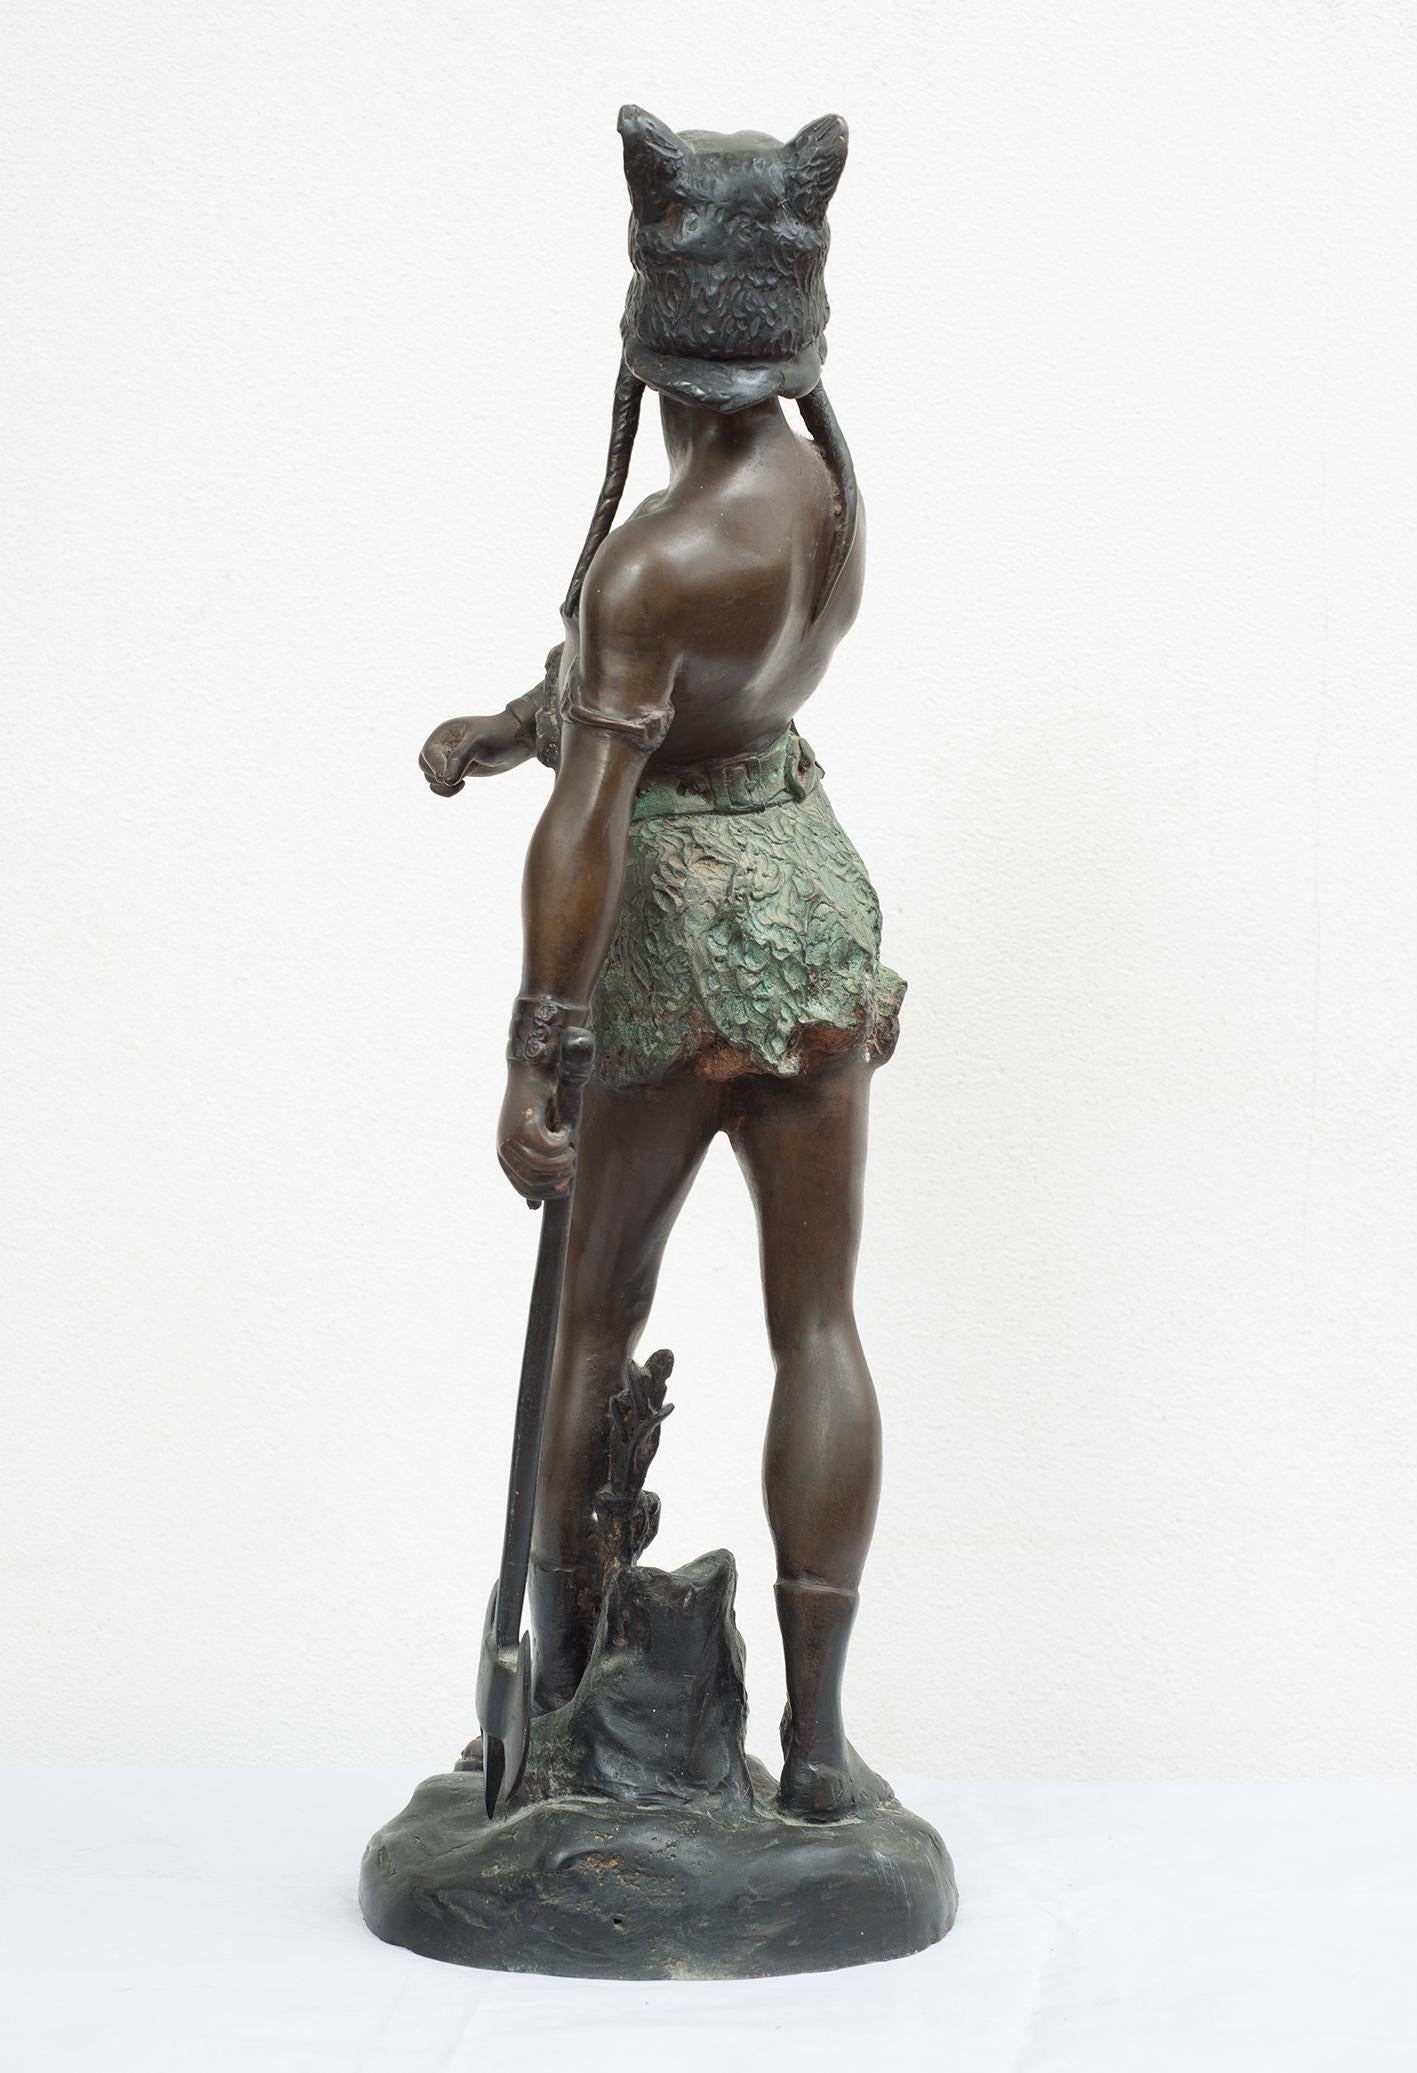 Antique patinated bronze sculpture depicting 